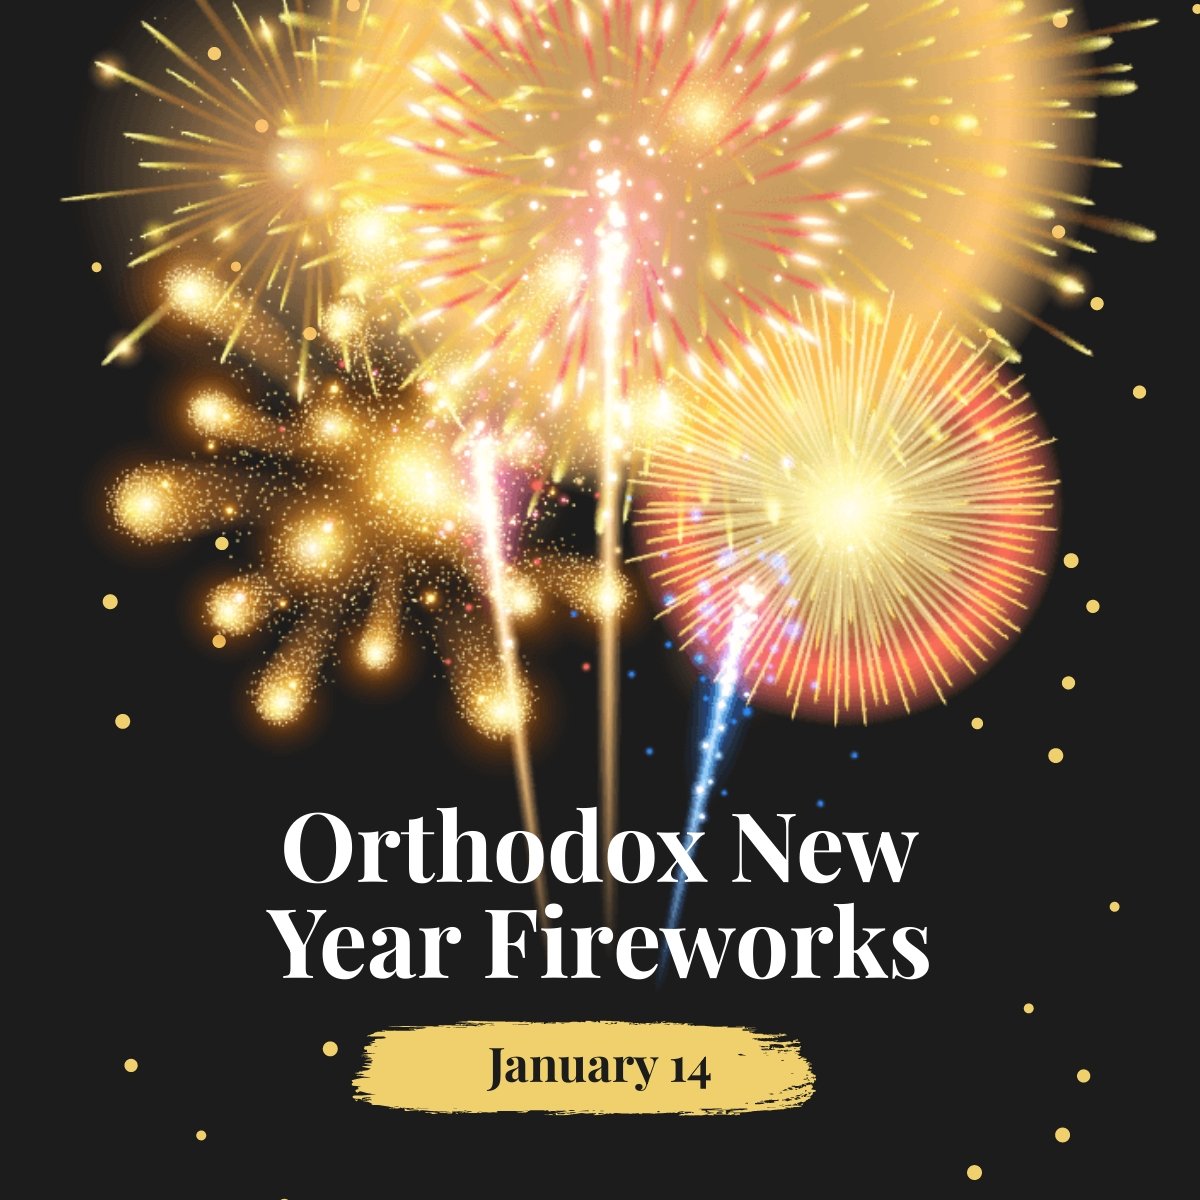 Orthodox New Year Fireworks Linkedin Post Template